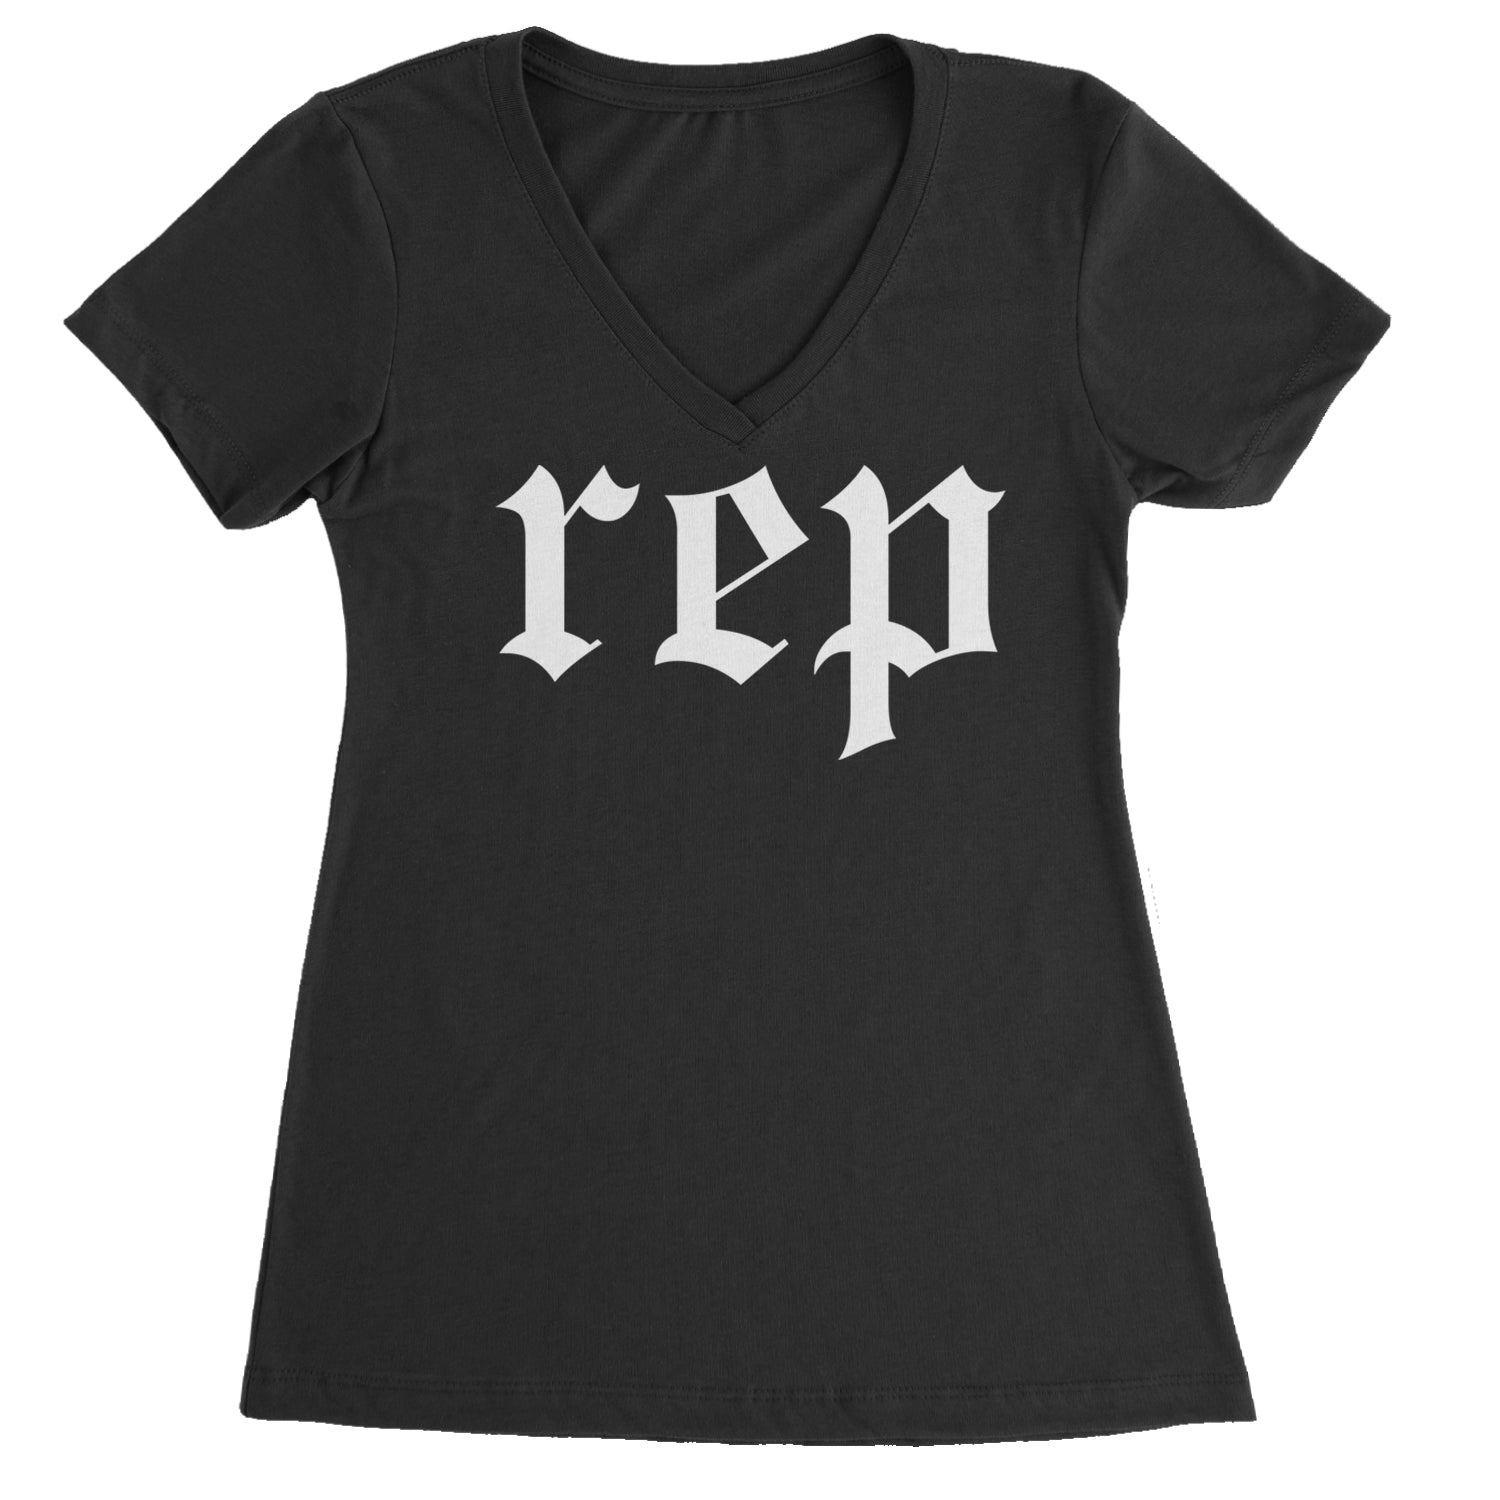 REP Reputation Eras Music Lover Gift Fan Favorite Ladies V-Neck T-shirt Black